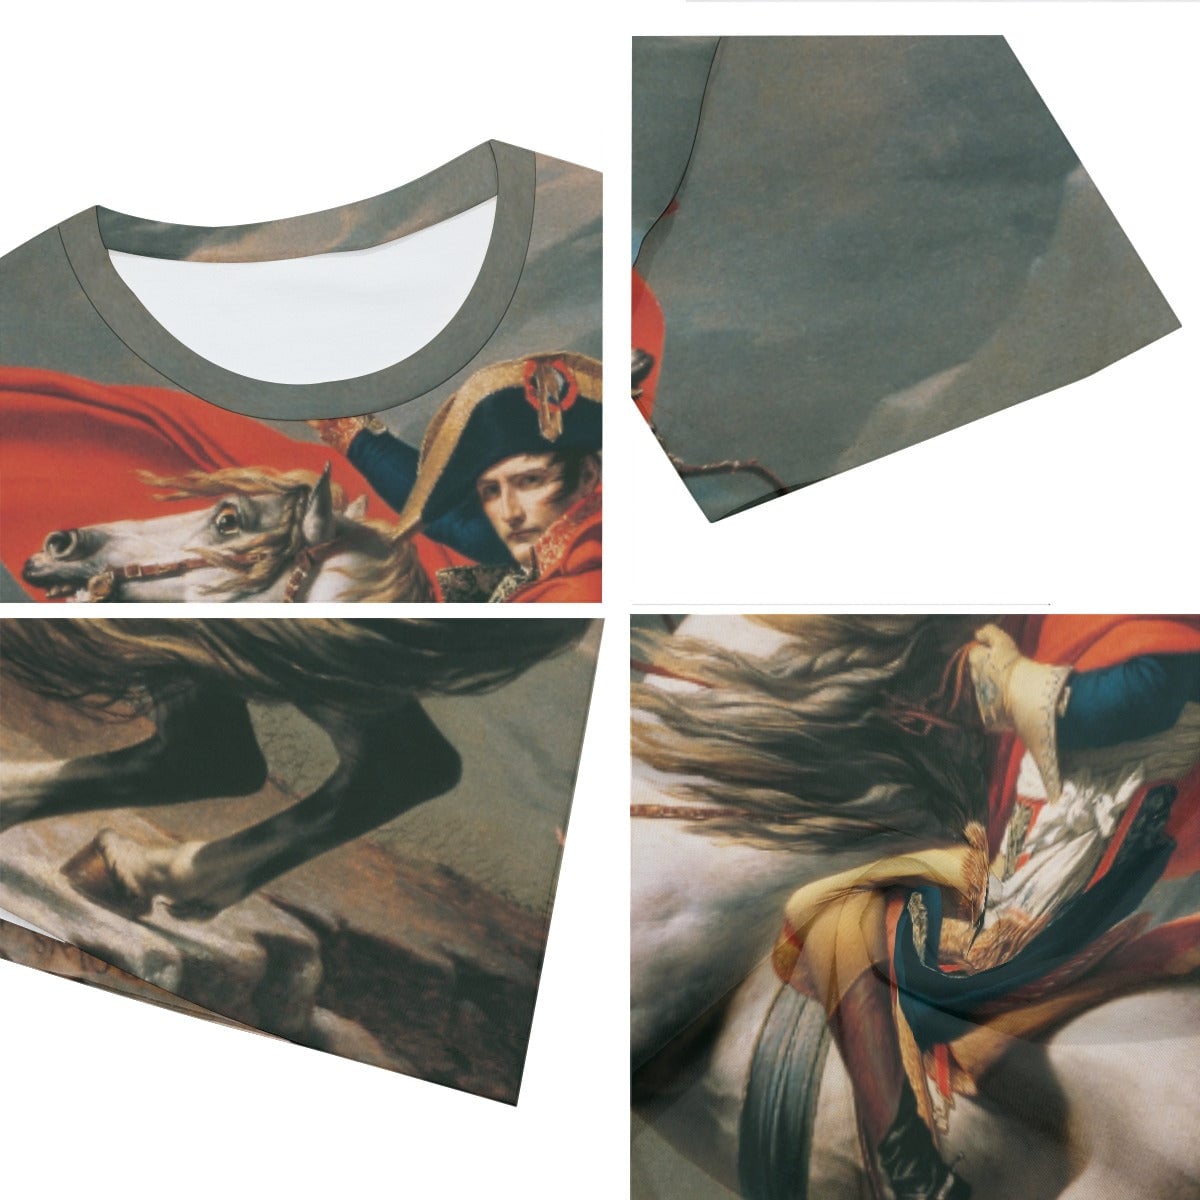 Napoleon Crossing the Alps T-Shirt